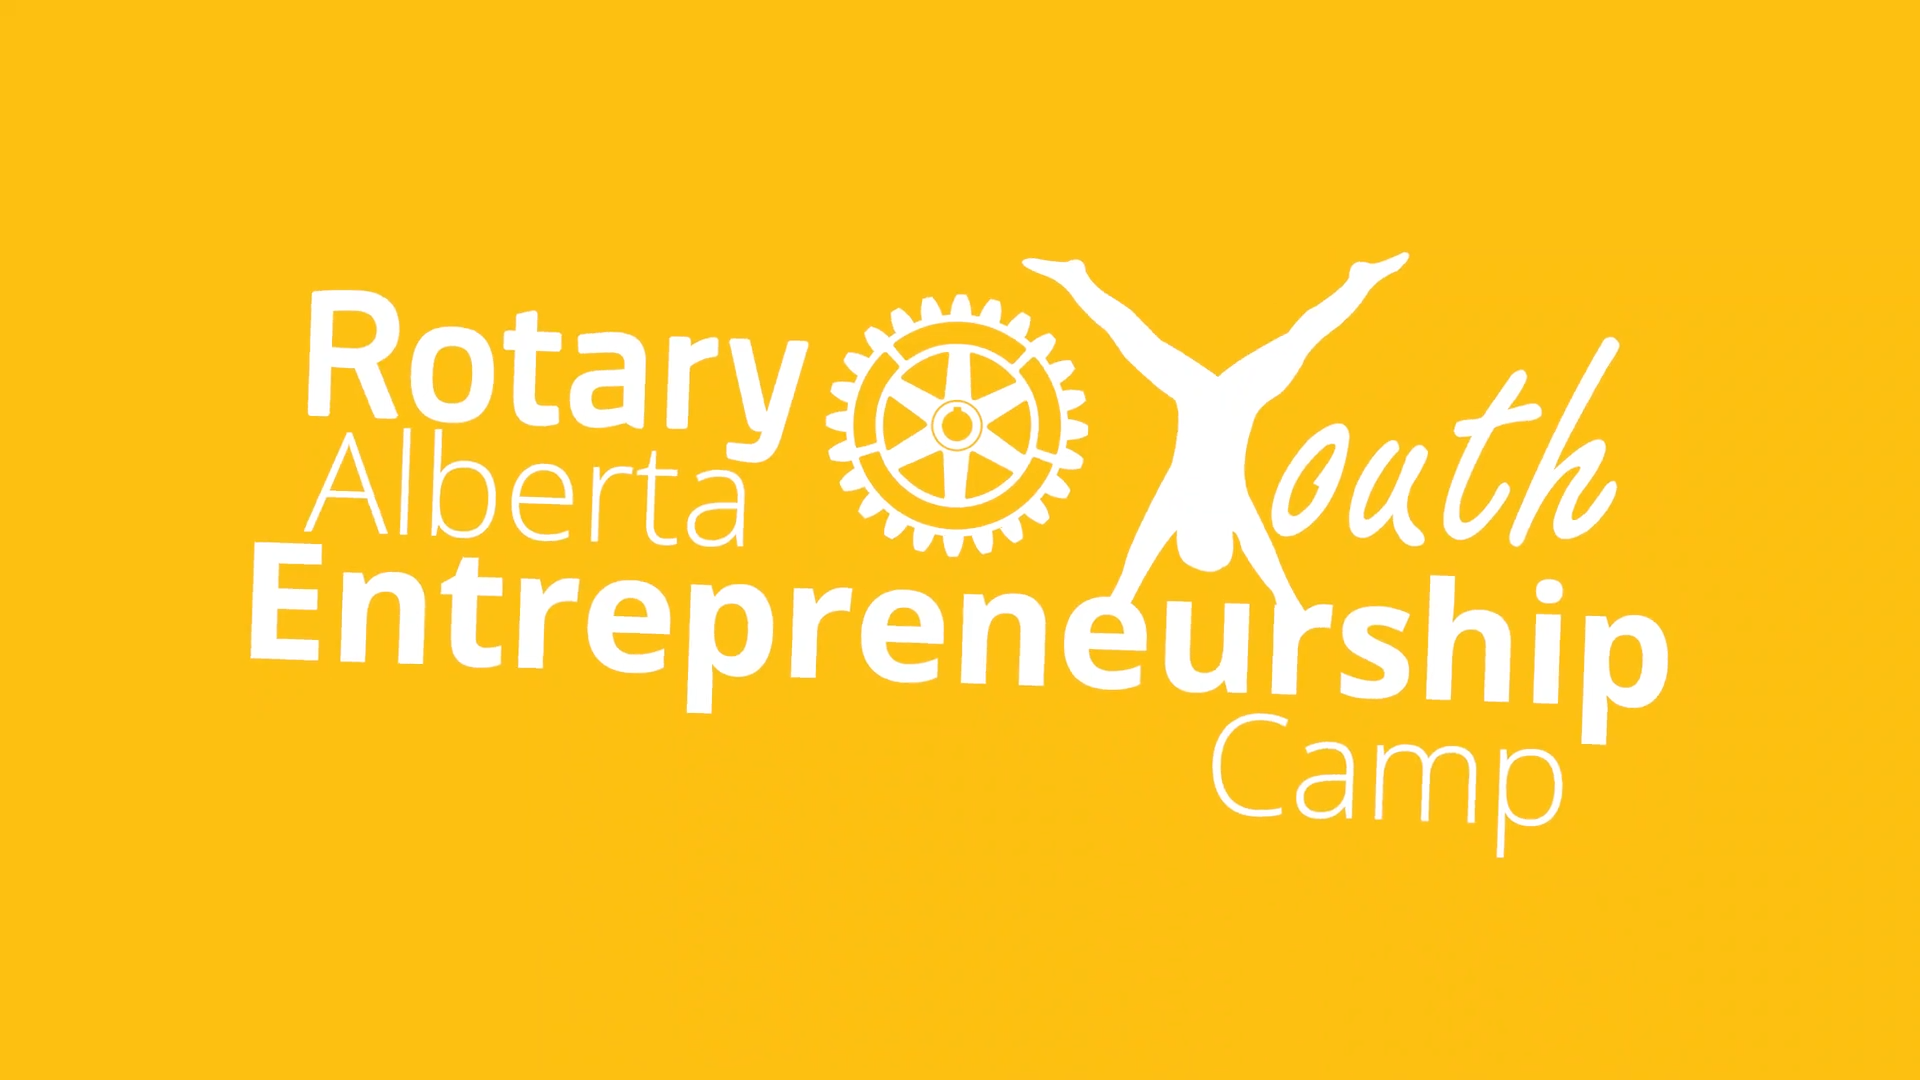 Rotary Alberta Entrepreneurship Camp